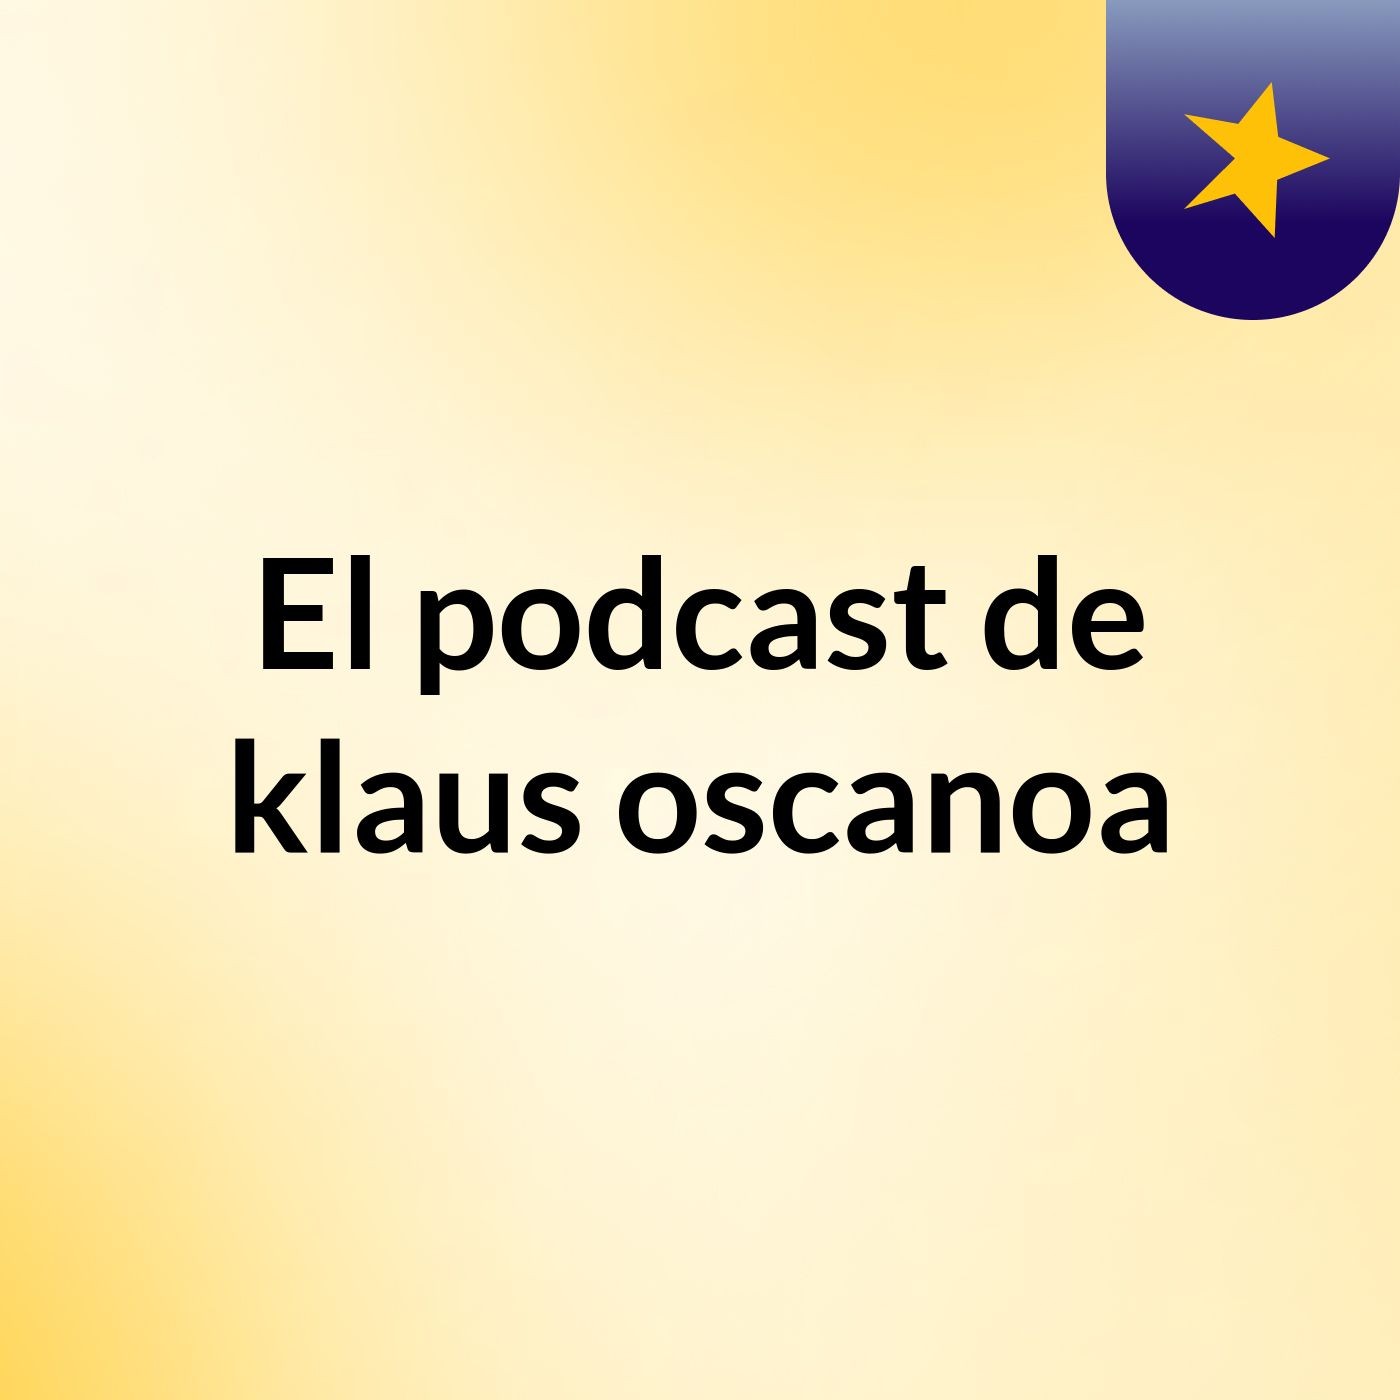 Episodio 4 - El podcast de klaus oscanoa